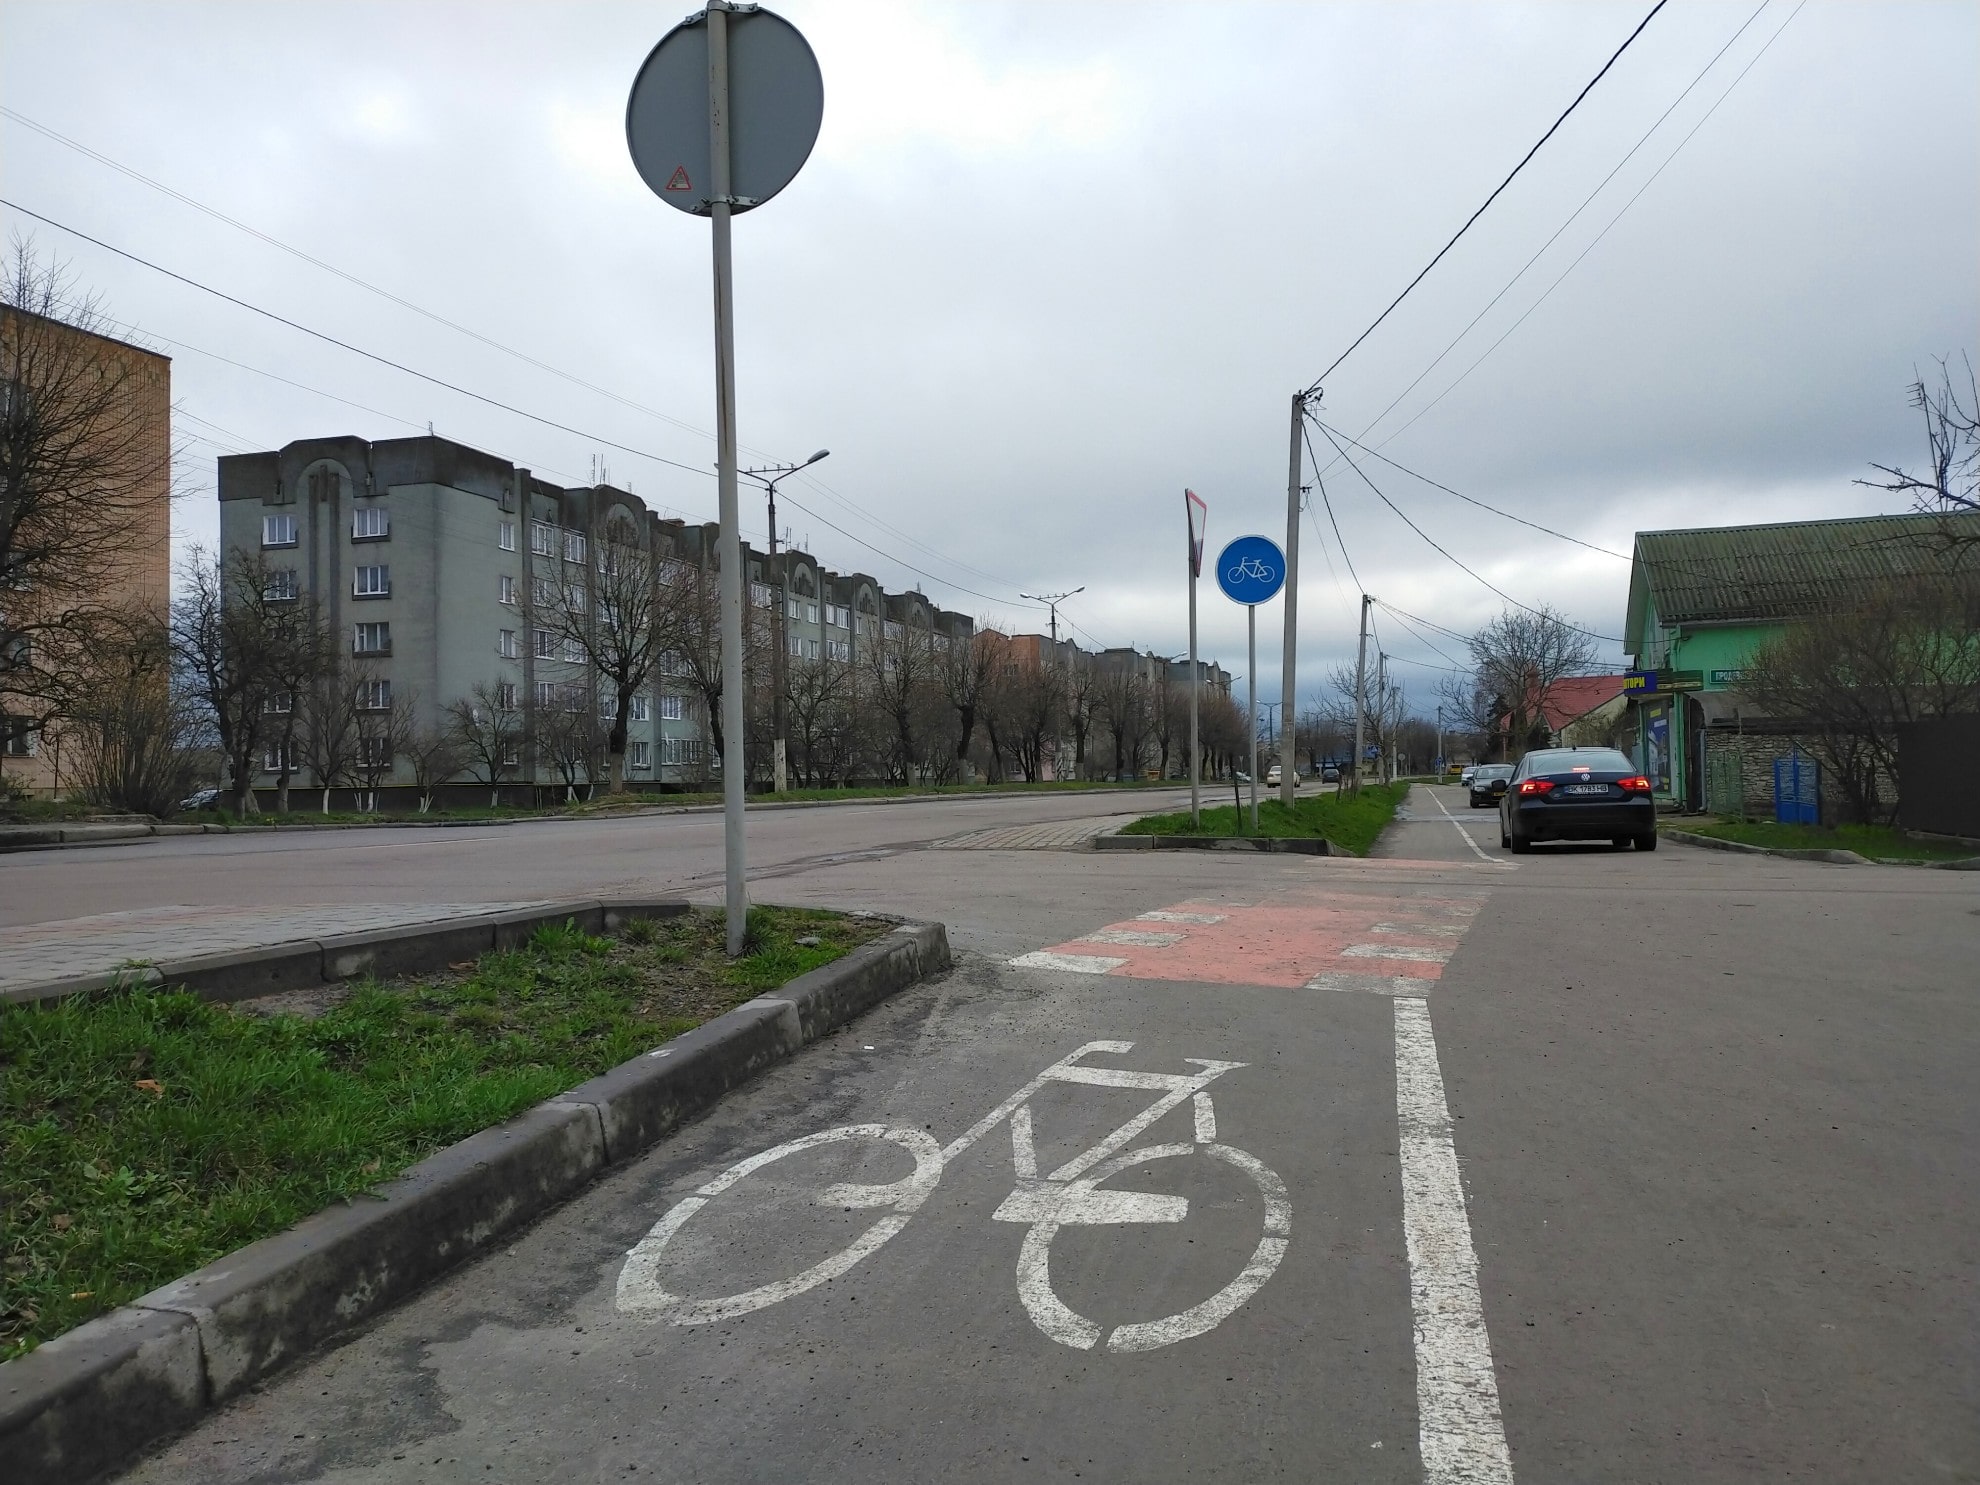 Dubno bike path 4